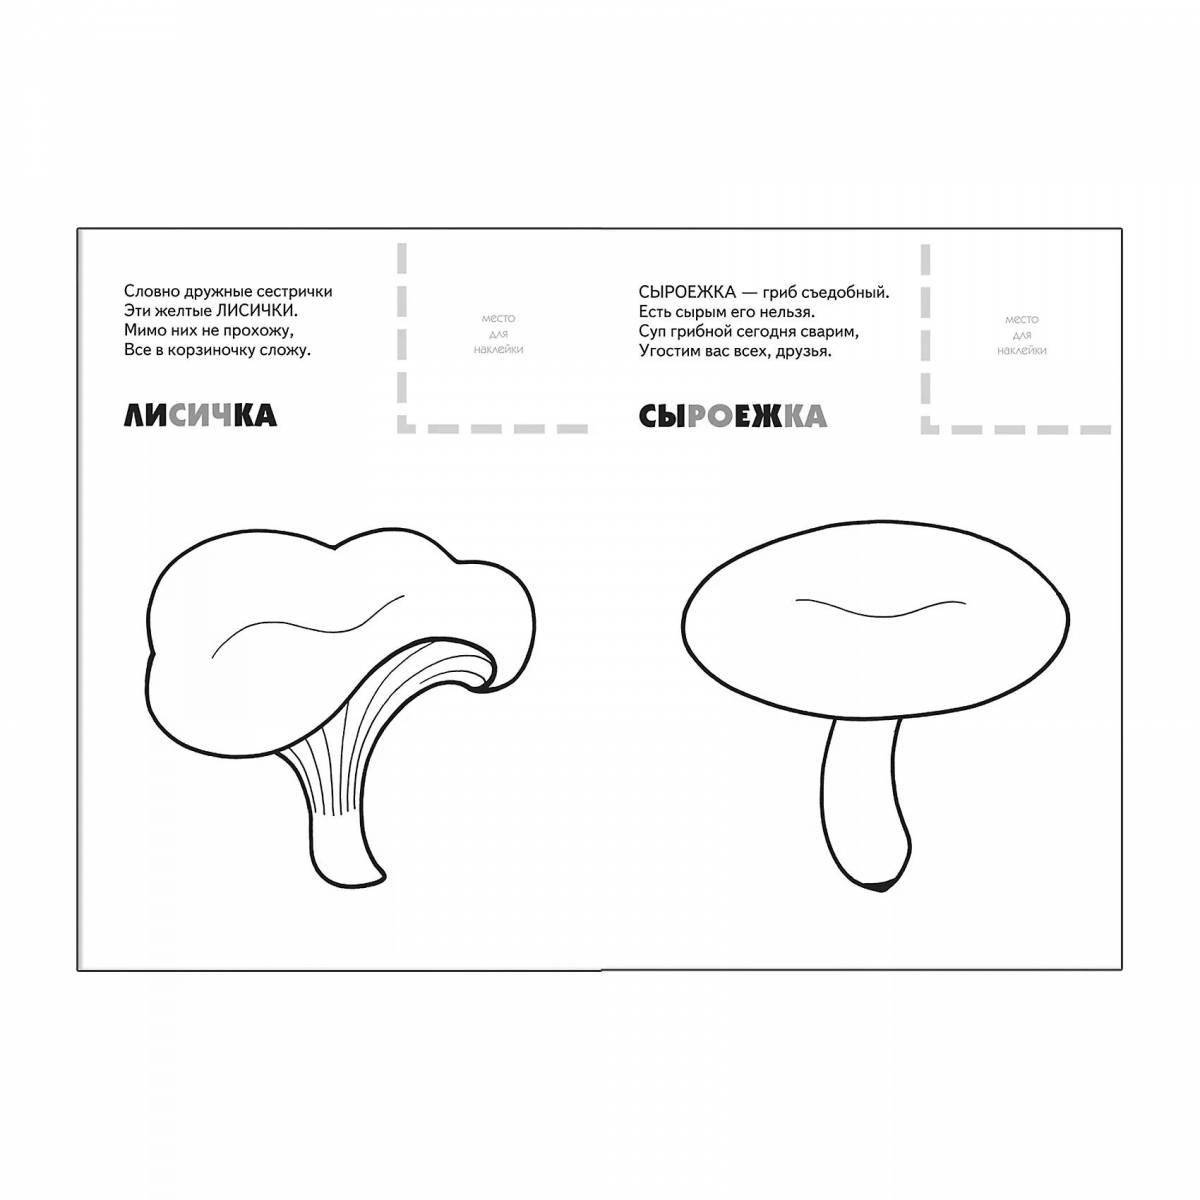 Attractive chanterelle mushroom coloring page